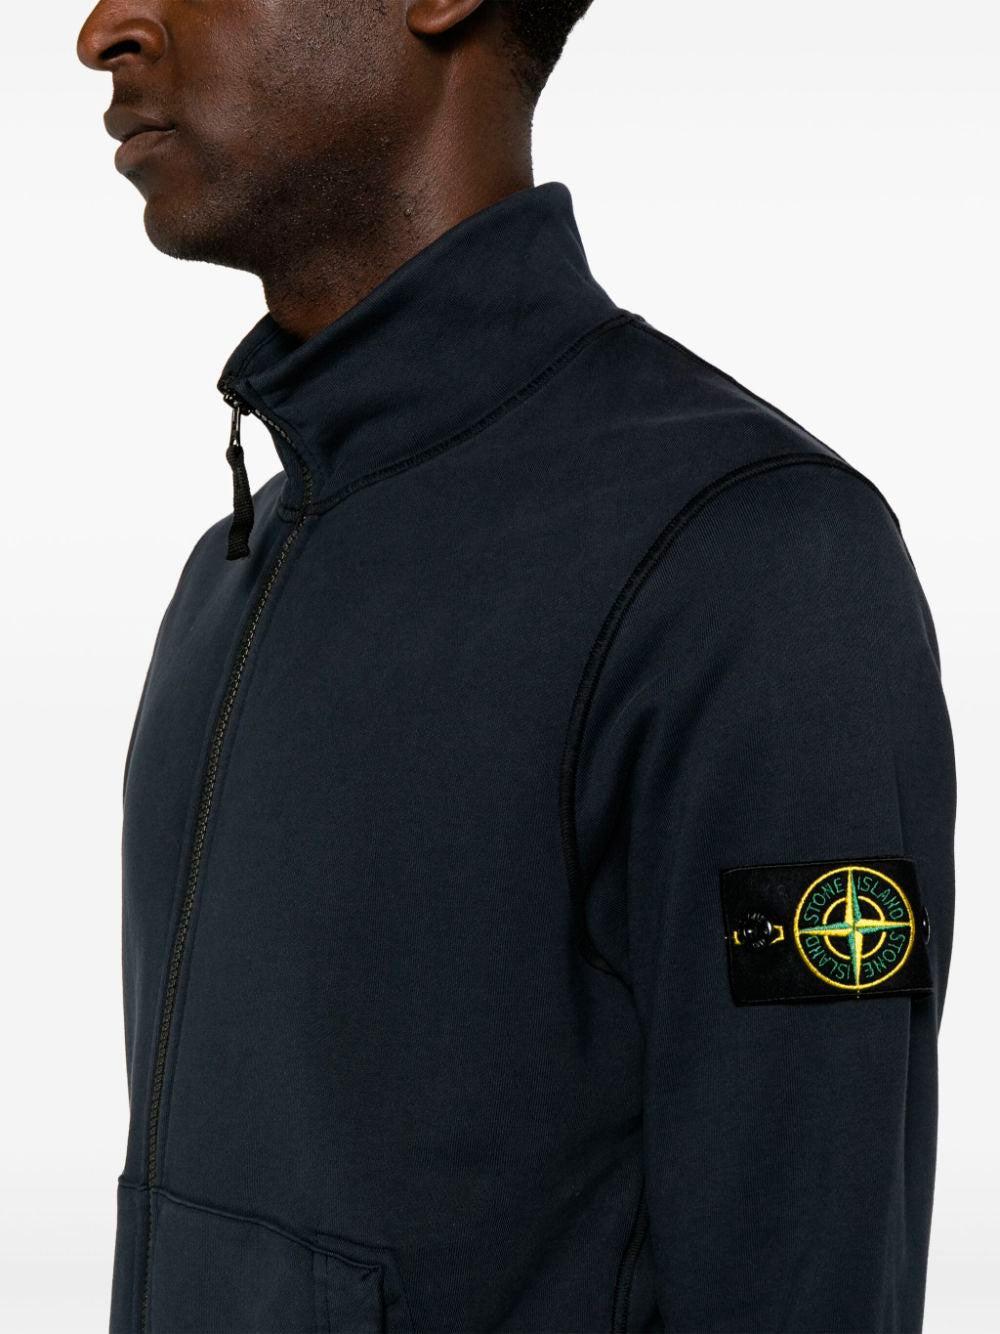 Compass-badge sweatshirt